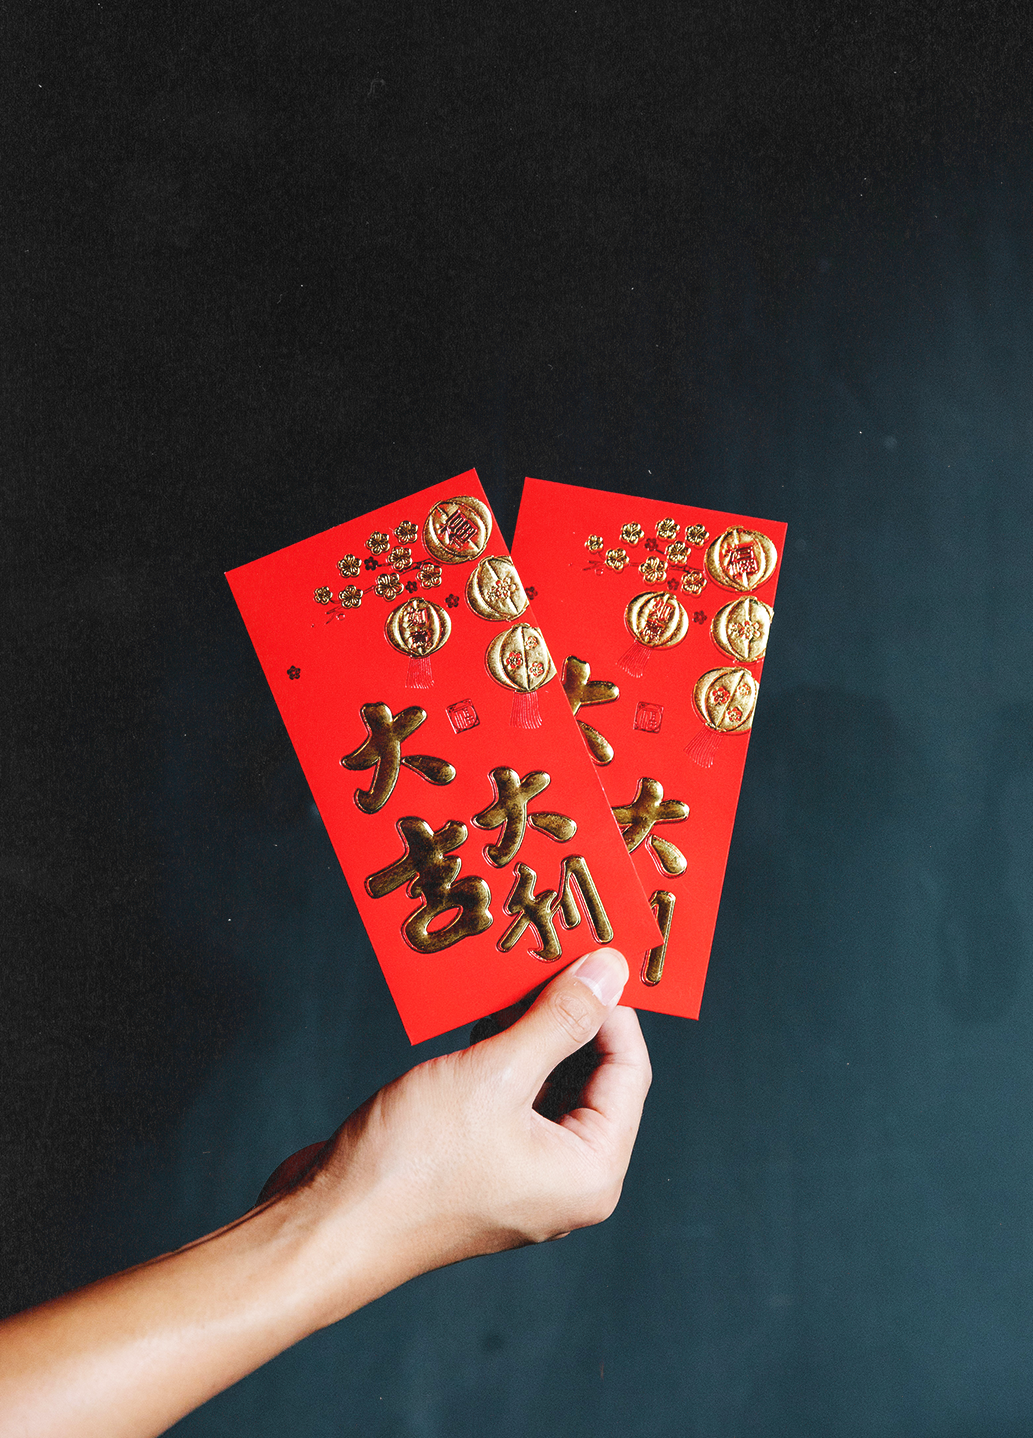 chinese red envelope 2023